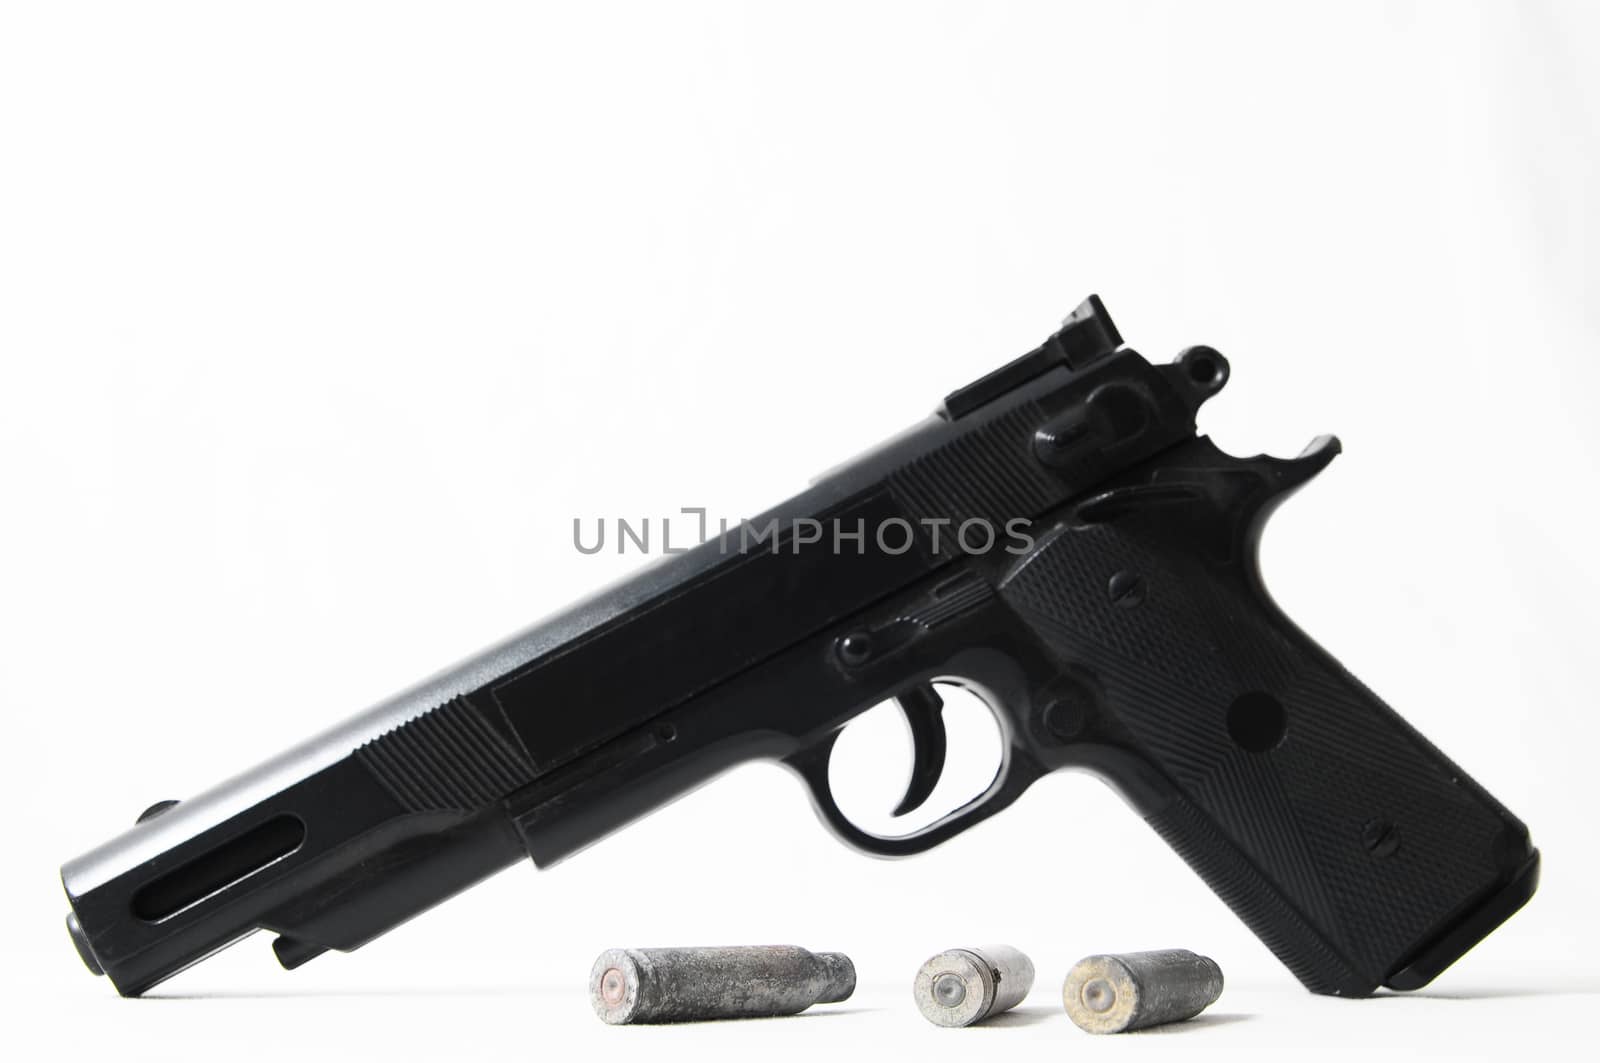 Pistol Gun and Bullets by underworld